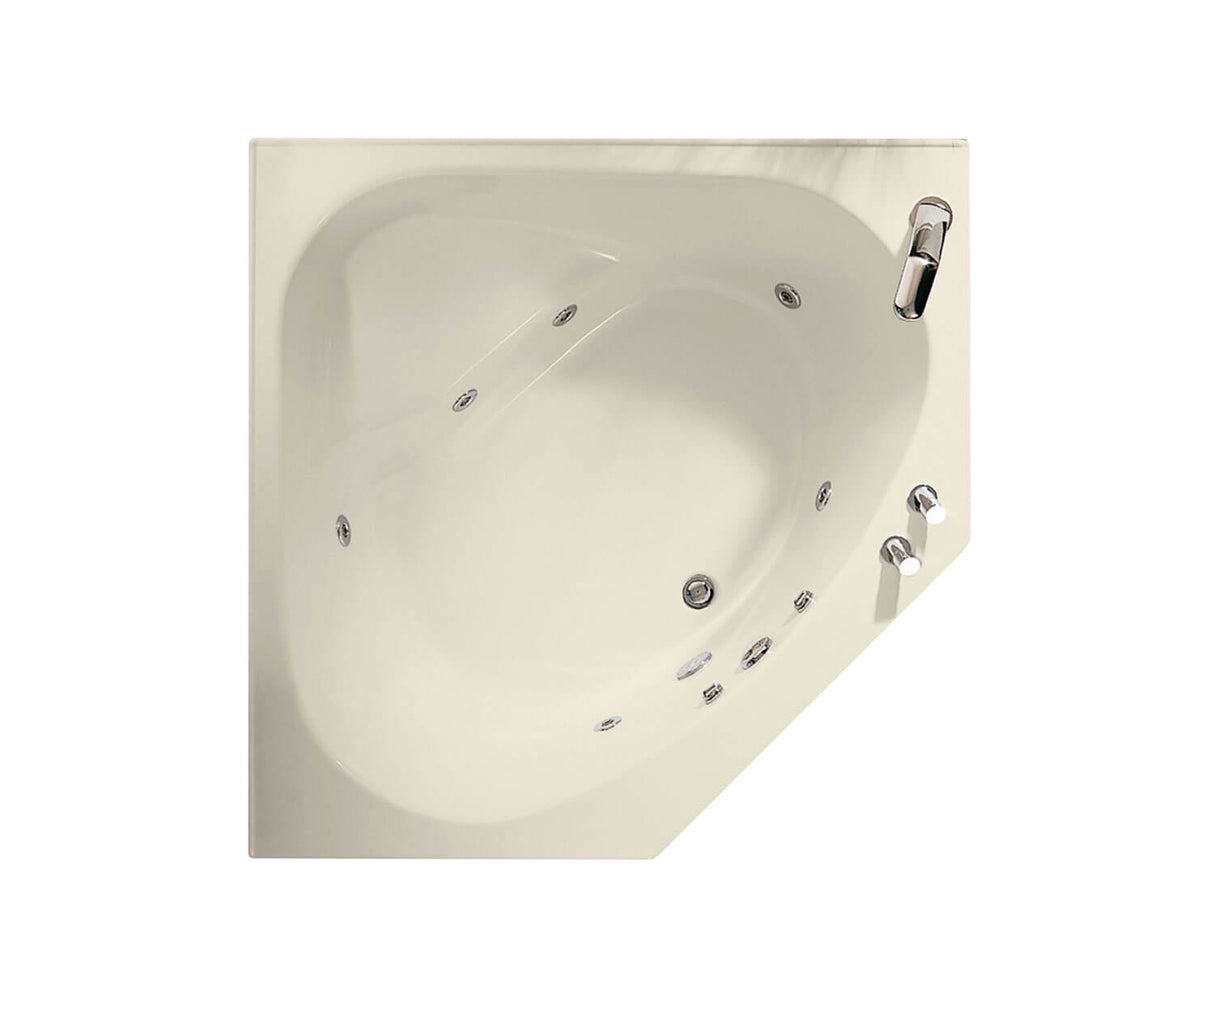 MAAX 100875-103-004 Tandem 5454 Acrylic Corner Center Drain Aeroeffect Bathtub in Bone